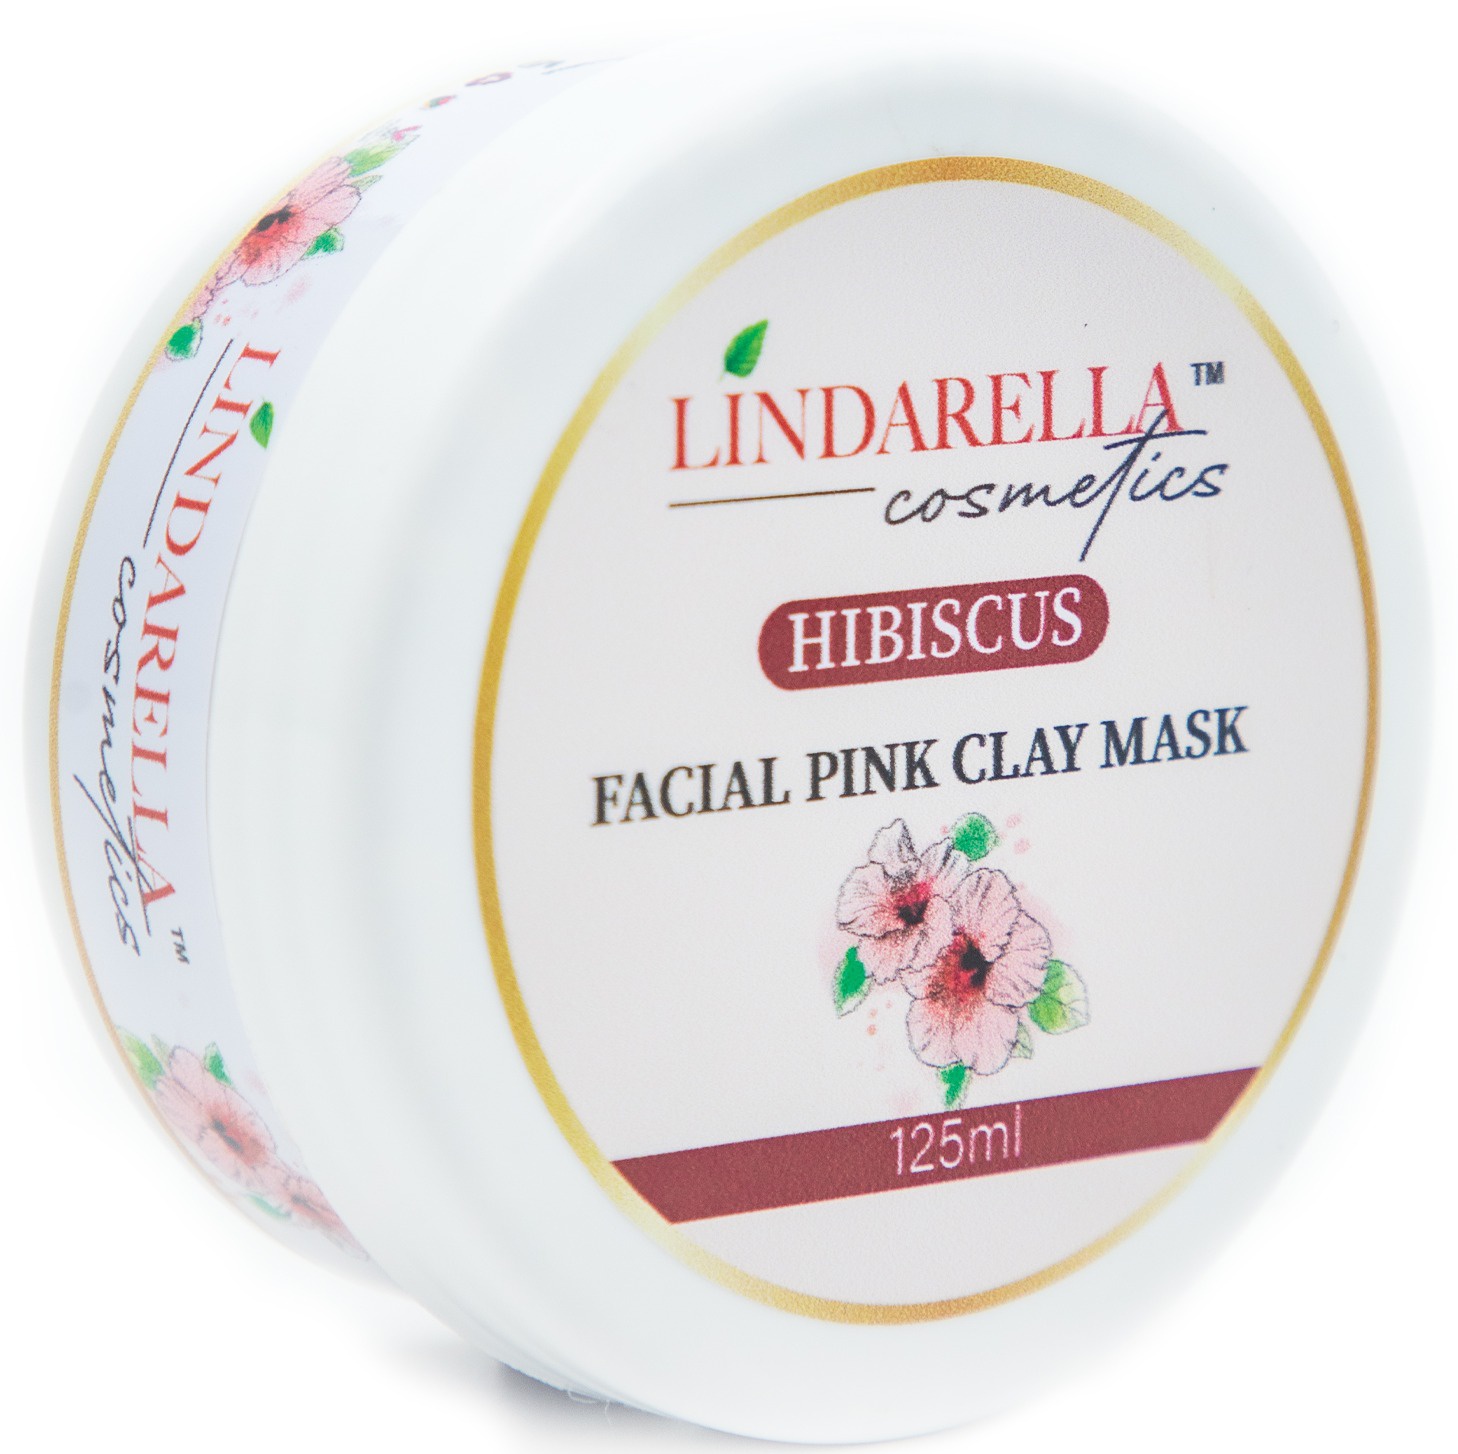 Lindarella Cosmetics Facial Pink Clay Mask